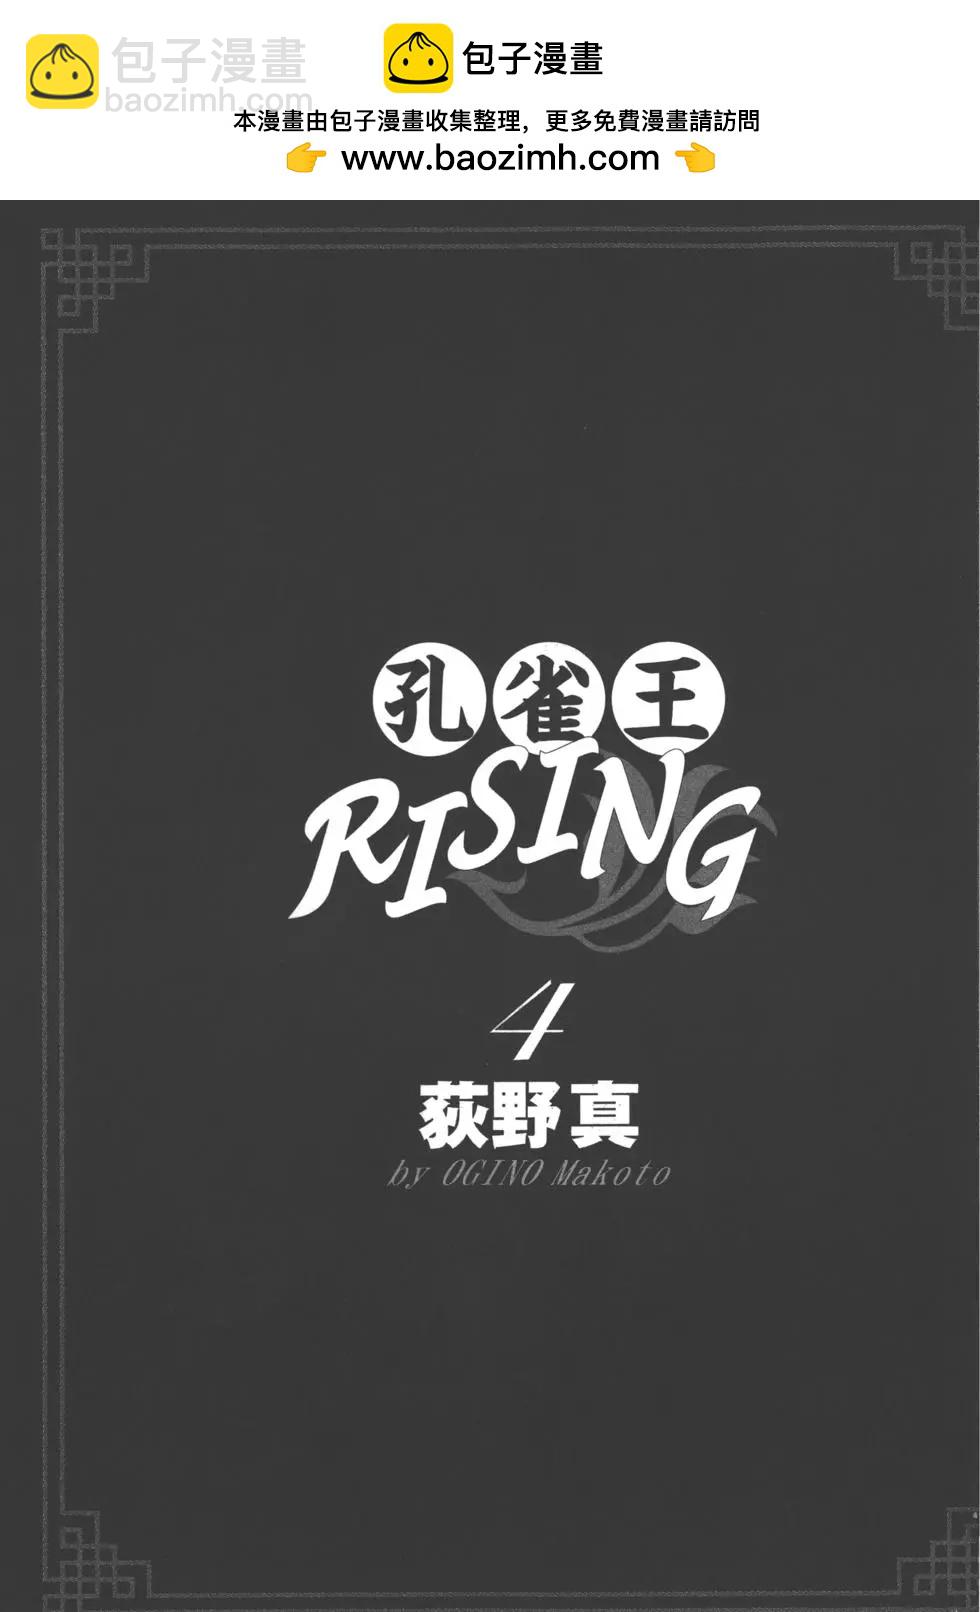 孔雀王RISING - 第04卷(1/4) - 2